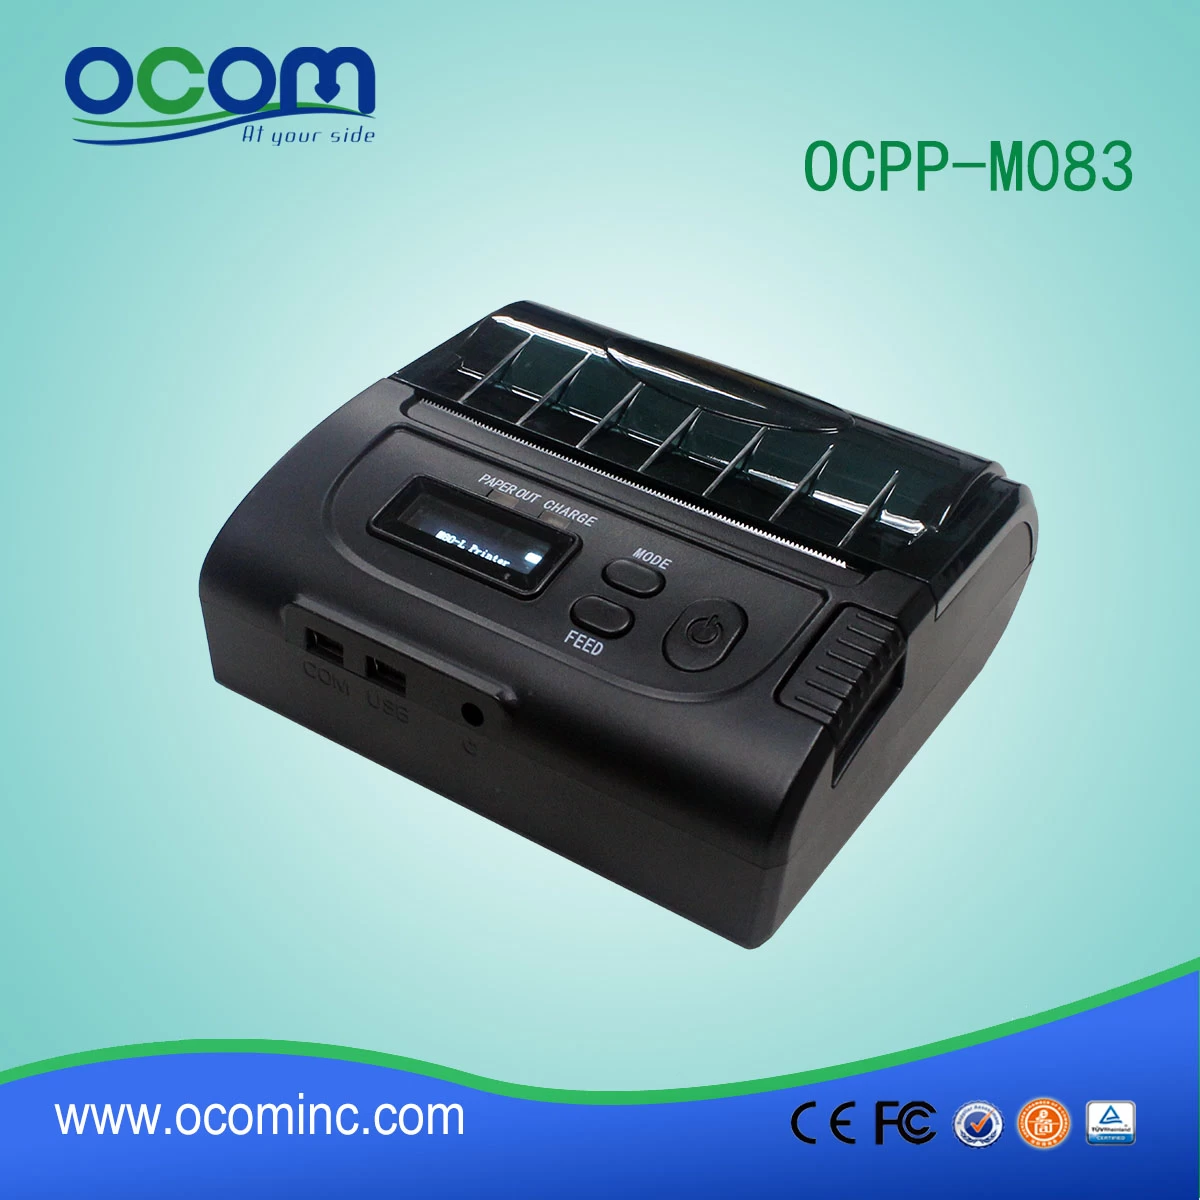 komen Storen Behoren OCPP-M083 80mm paper smartphone bluetooth mini printer